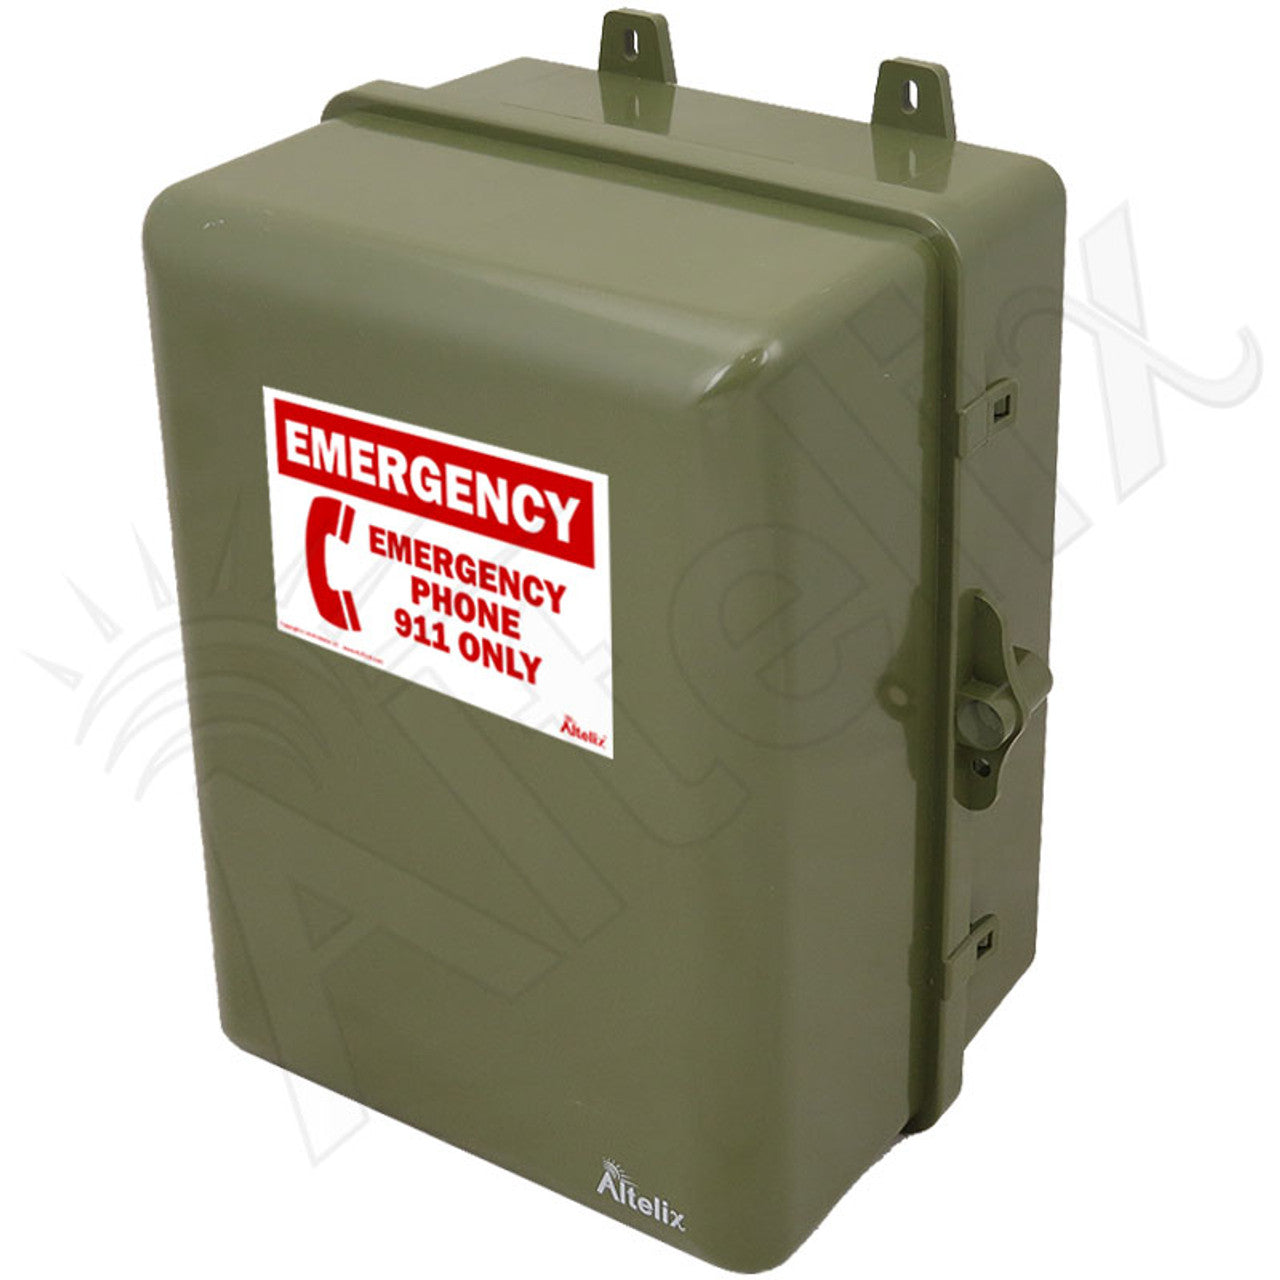 Altelix 12x9x7 IP66 NEMA 4X Outdoor Weatherproof Emergency Phone Call Box with Emergency Phone Label